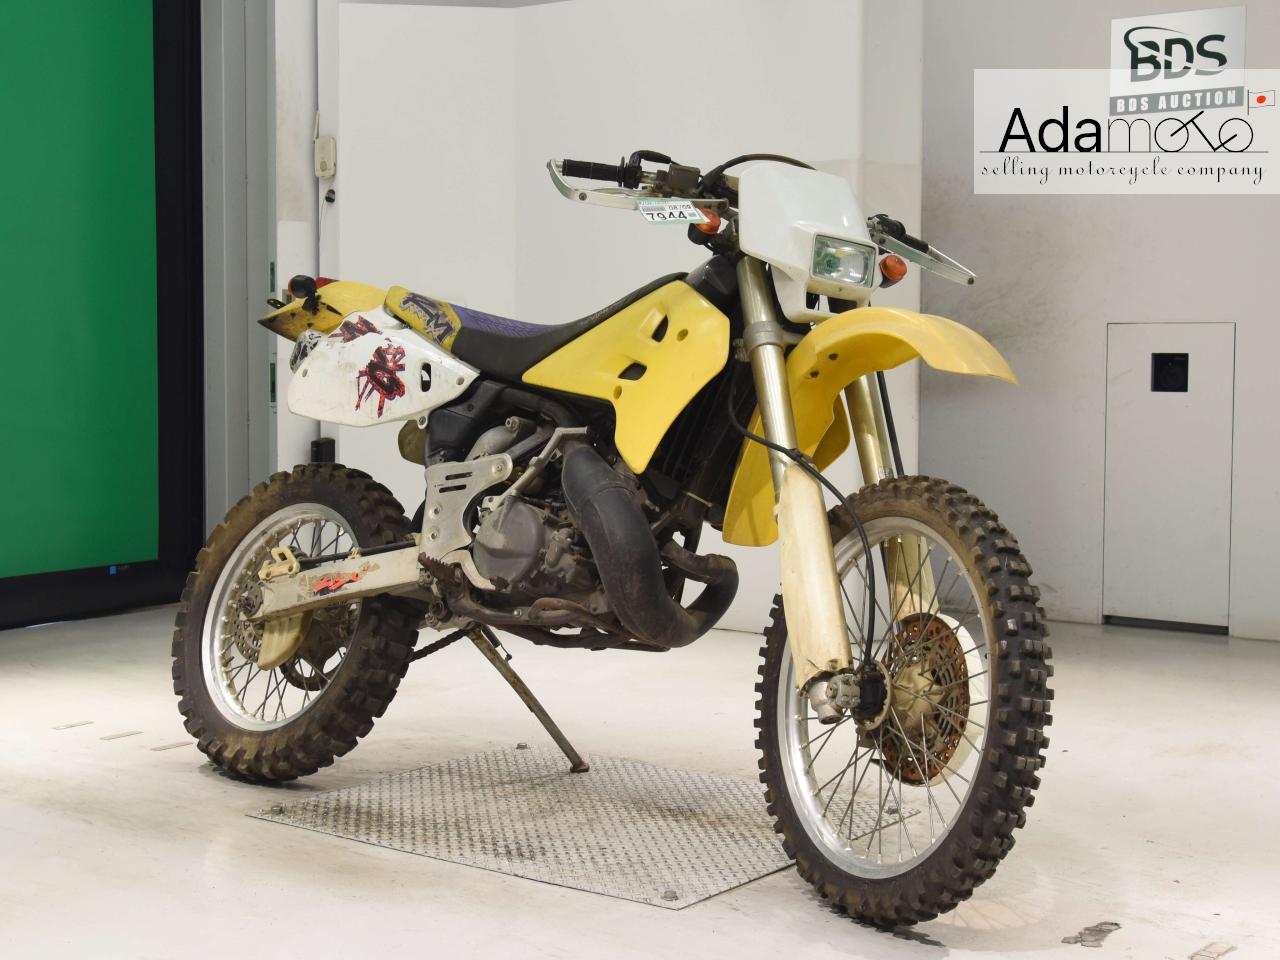 Suzuki RMX250 - Adamoto - Motorcycles from Japan